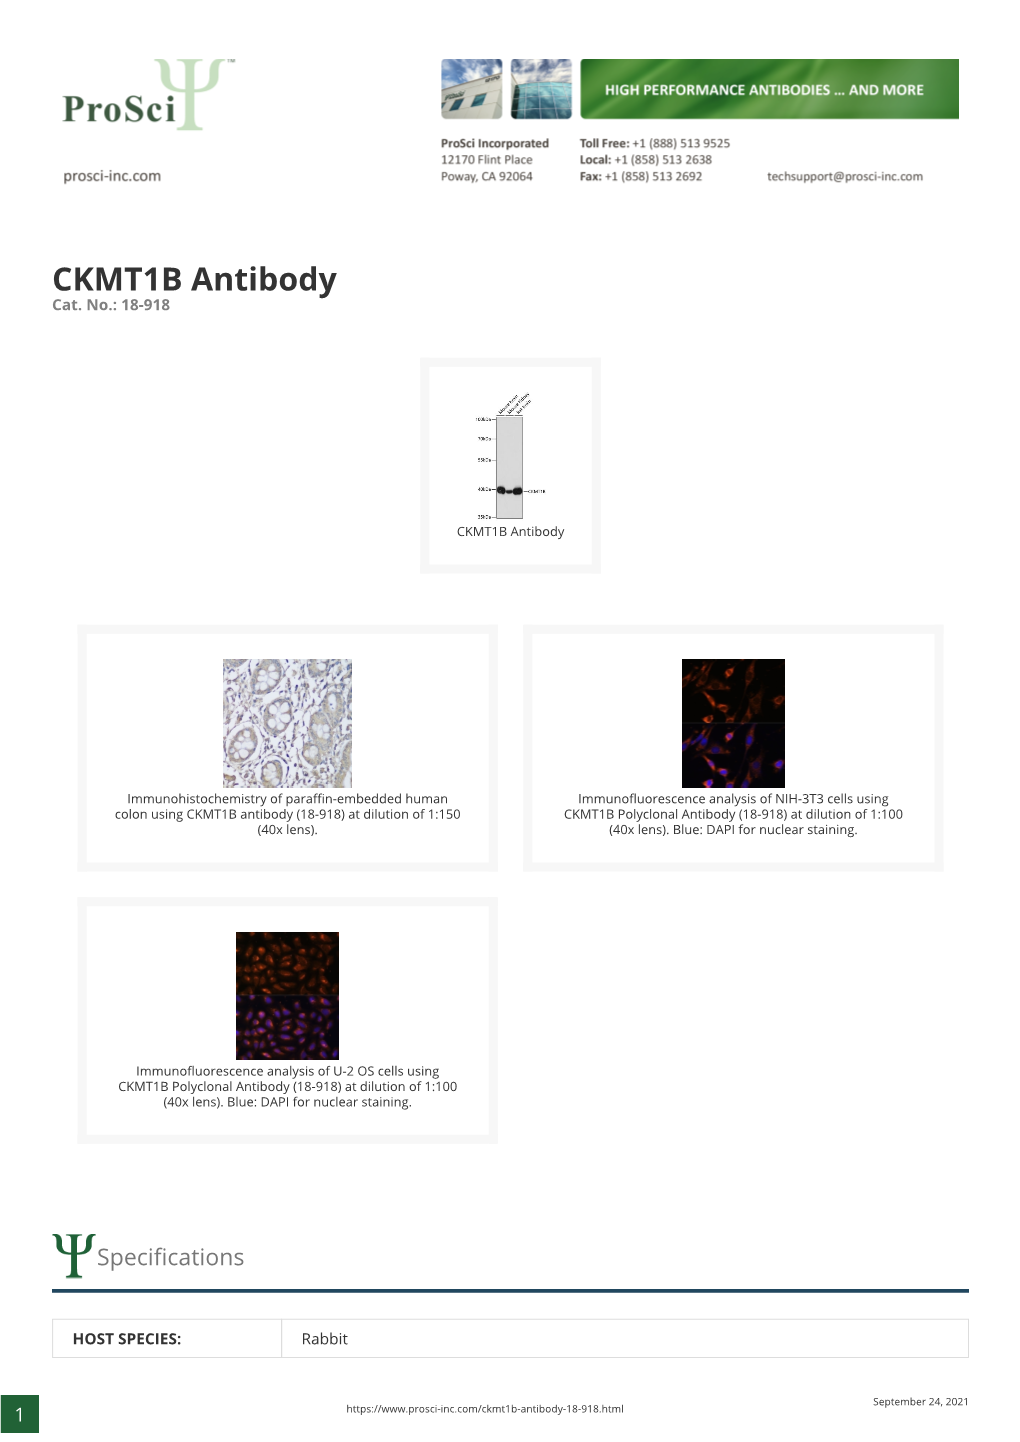 CKMT1B Antibody Cat